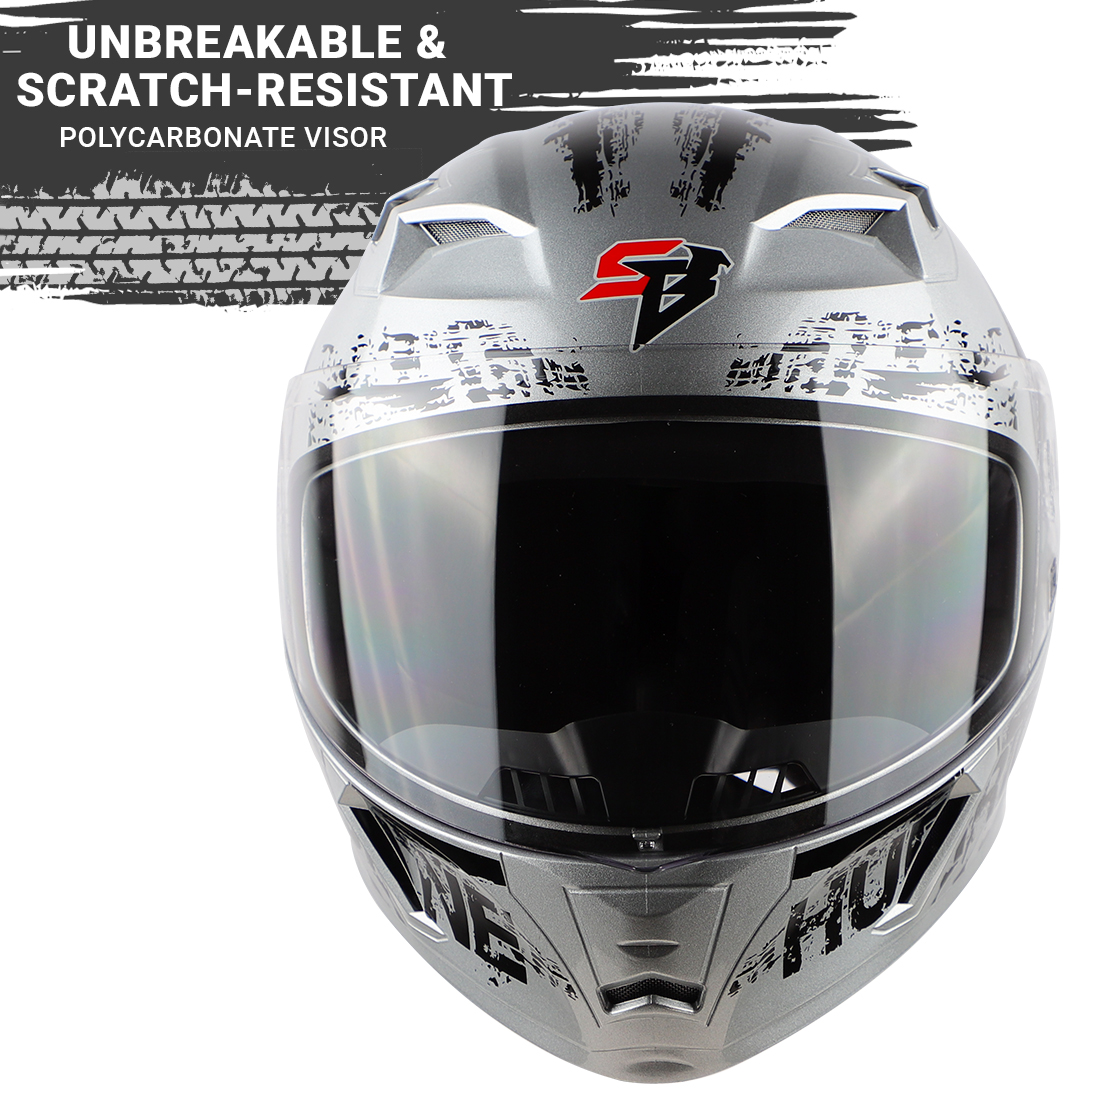 Steelbird SBA-21 Hurricane ISI Certified Full Face Graphic Helmet (Glossy Silver Black)